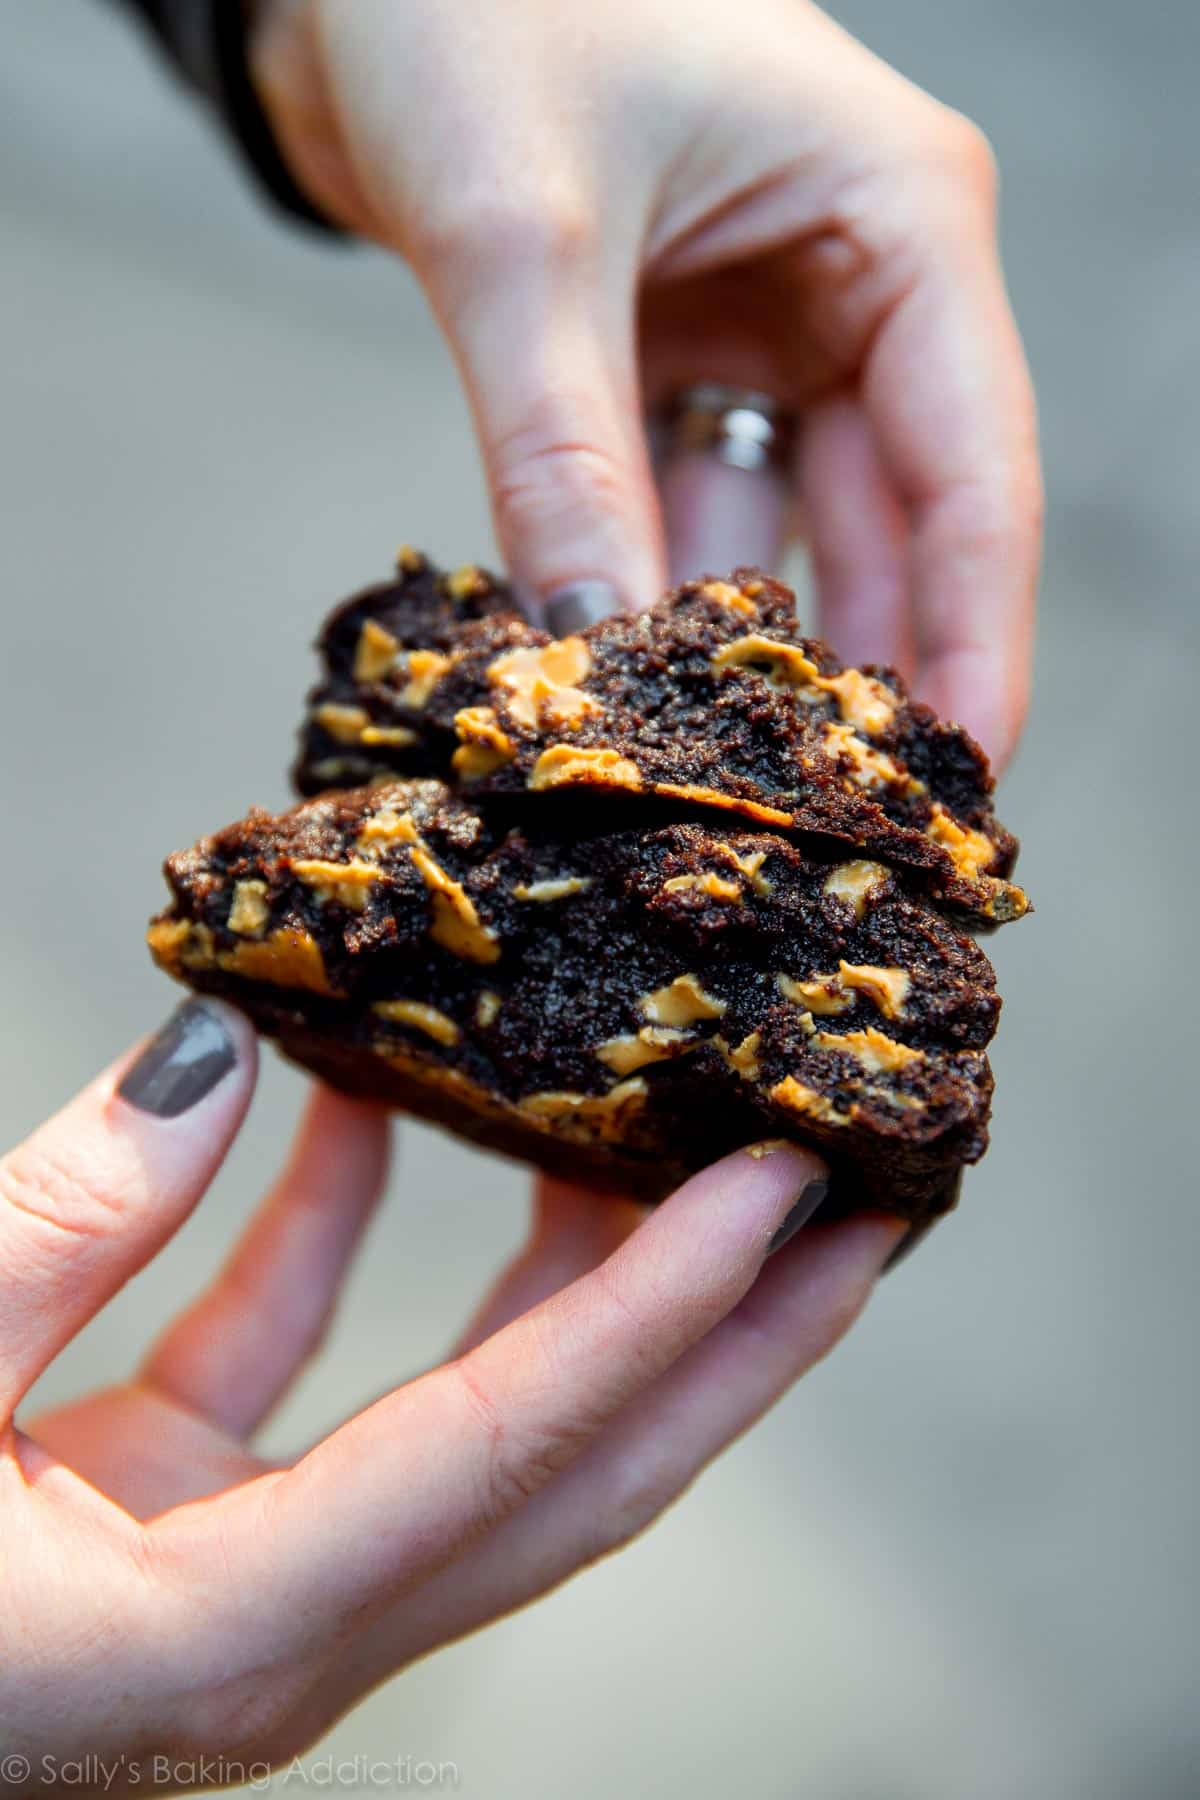 hands holding a Levain Bakery cookie broken in half showing the inside